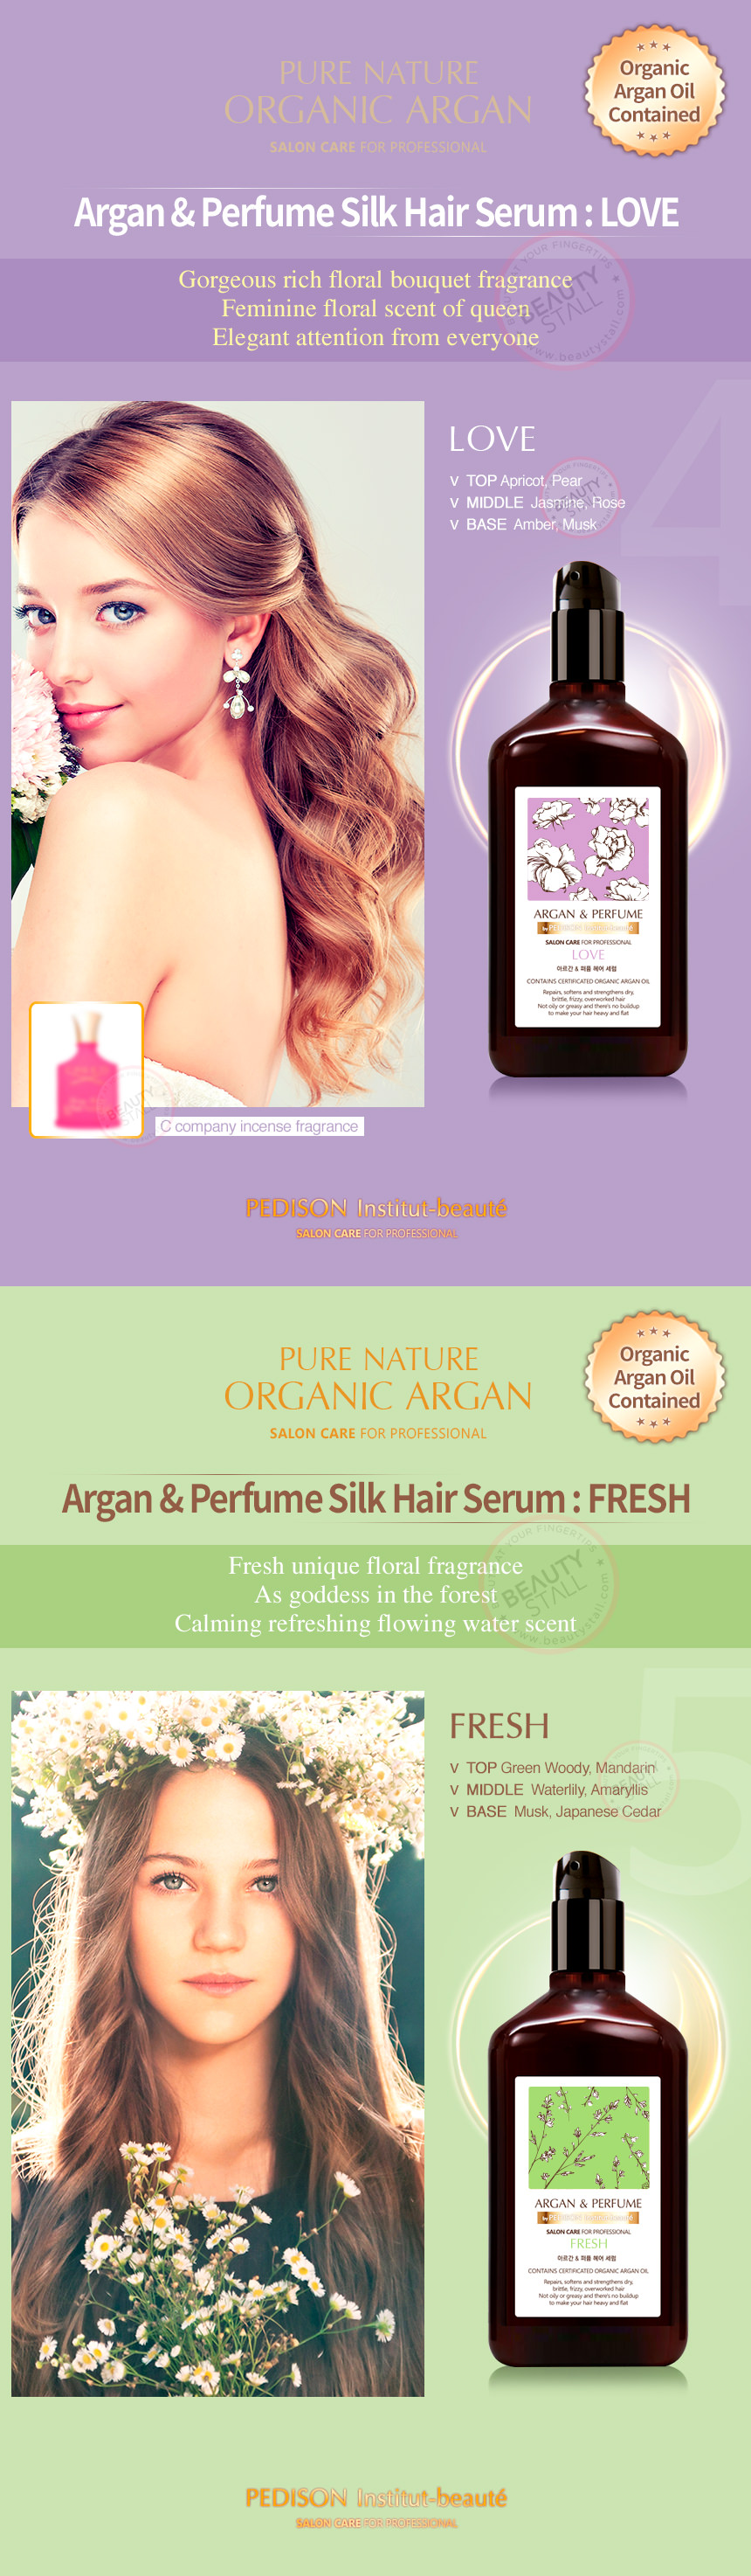 PEDISON Institut-beauté Argan Perfume Hair Serum 130ml - Romantic -  BEAUTYSTALL